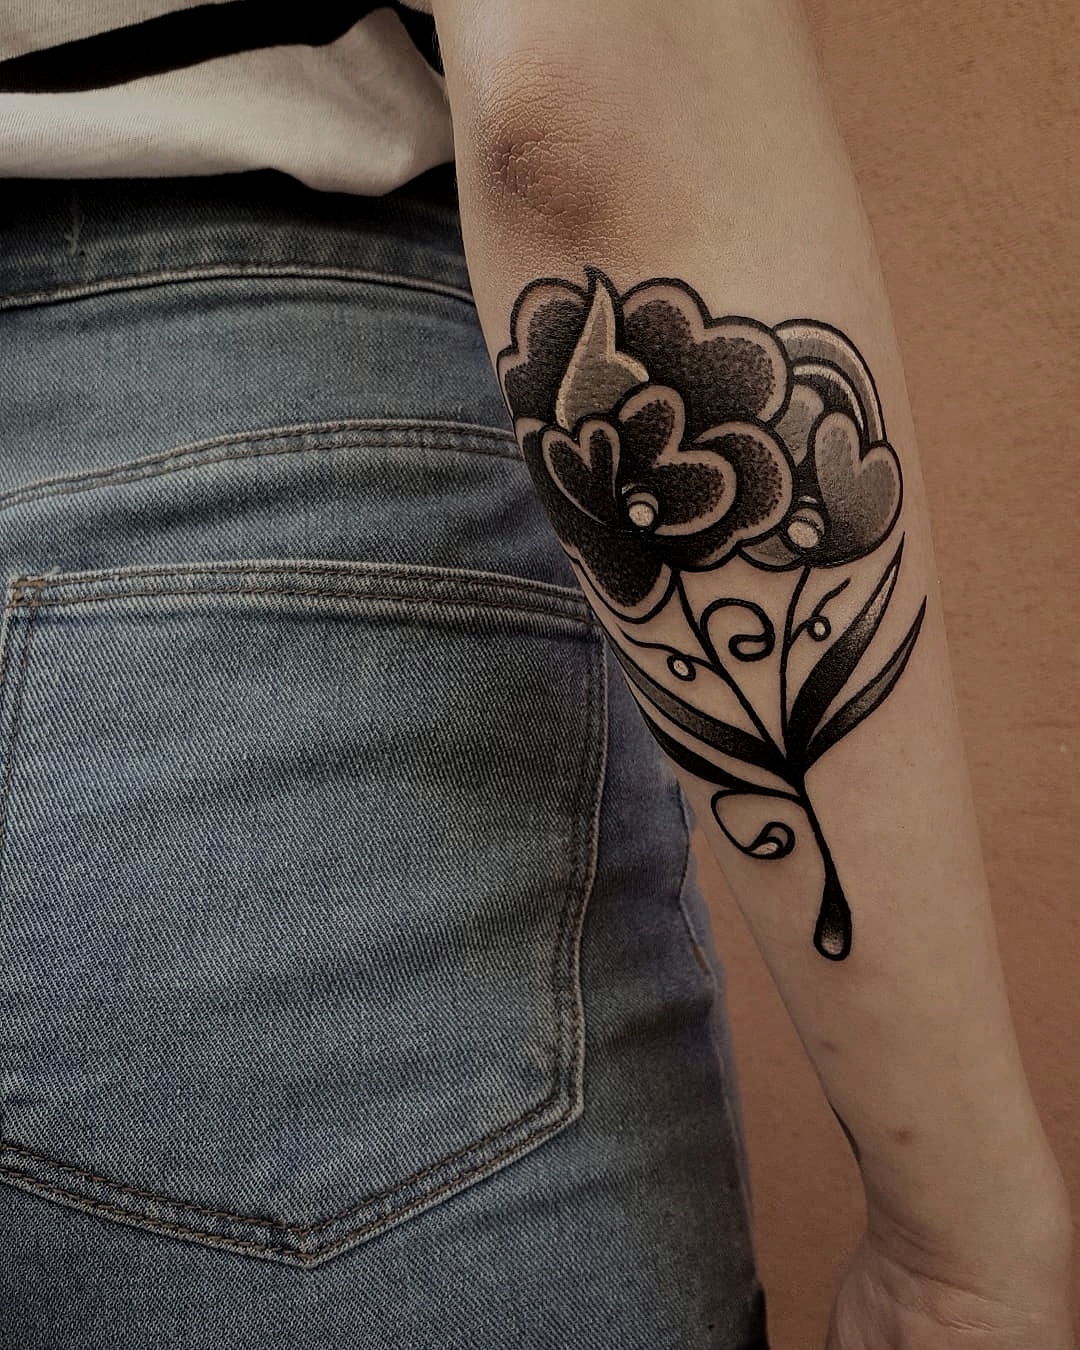 Flower tattoo by Hannah Pixie Snowdon